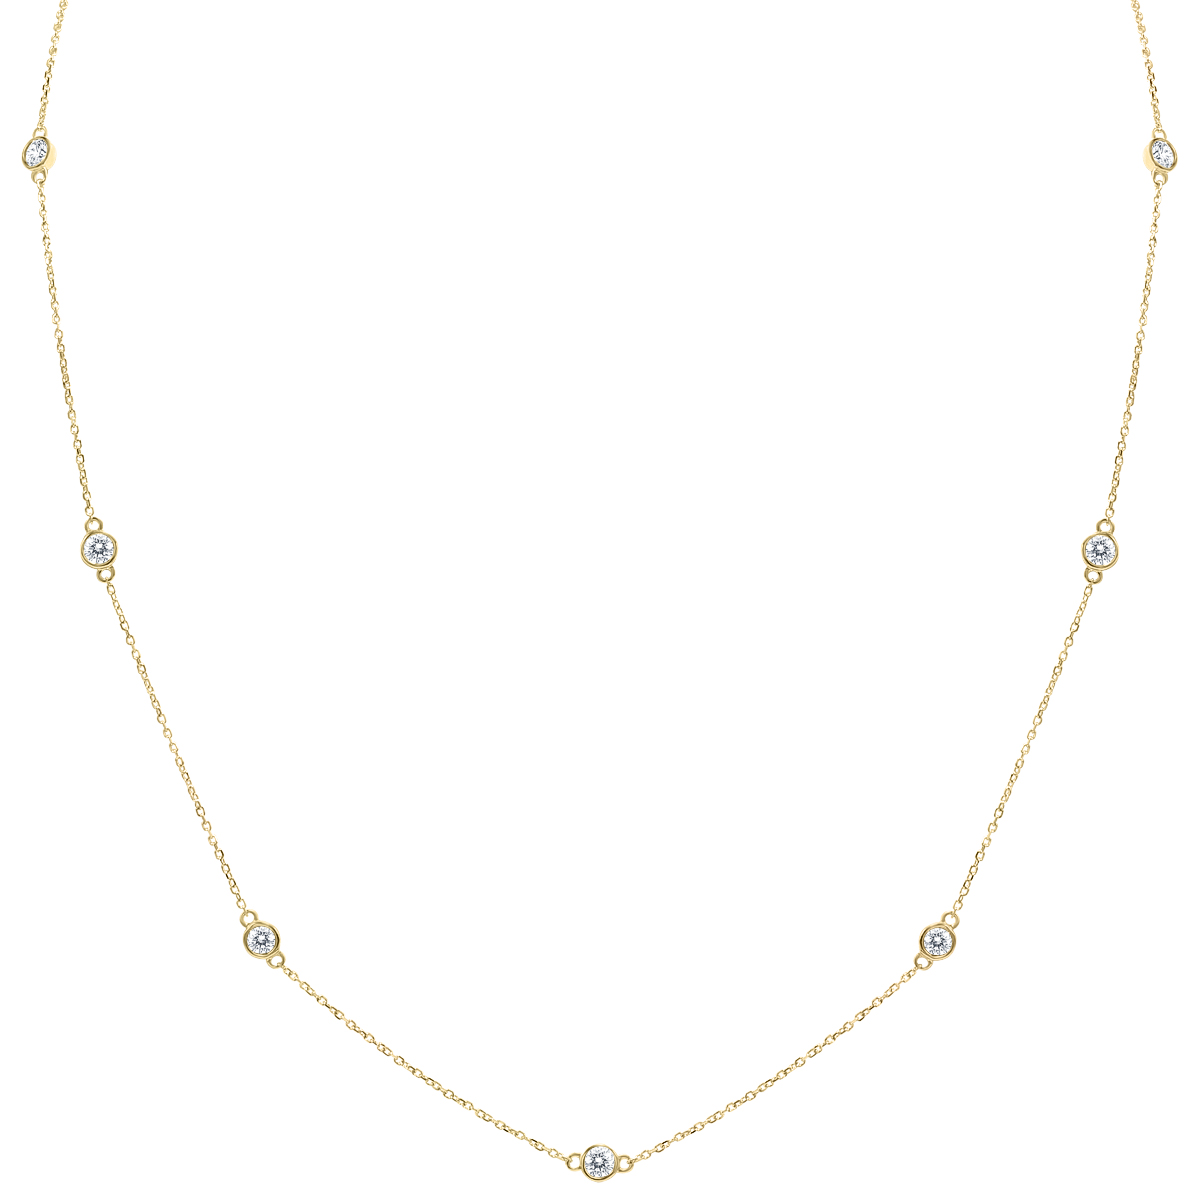 szul.com 1 Carat TW Bezel Set Diamond Station Necklace in 14K Yellow Gold